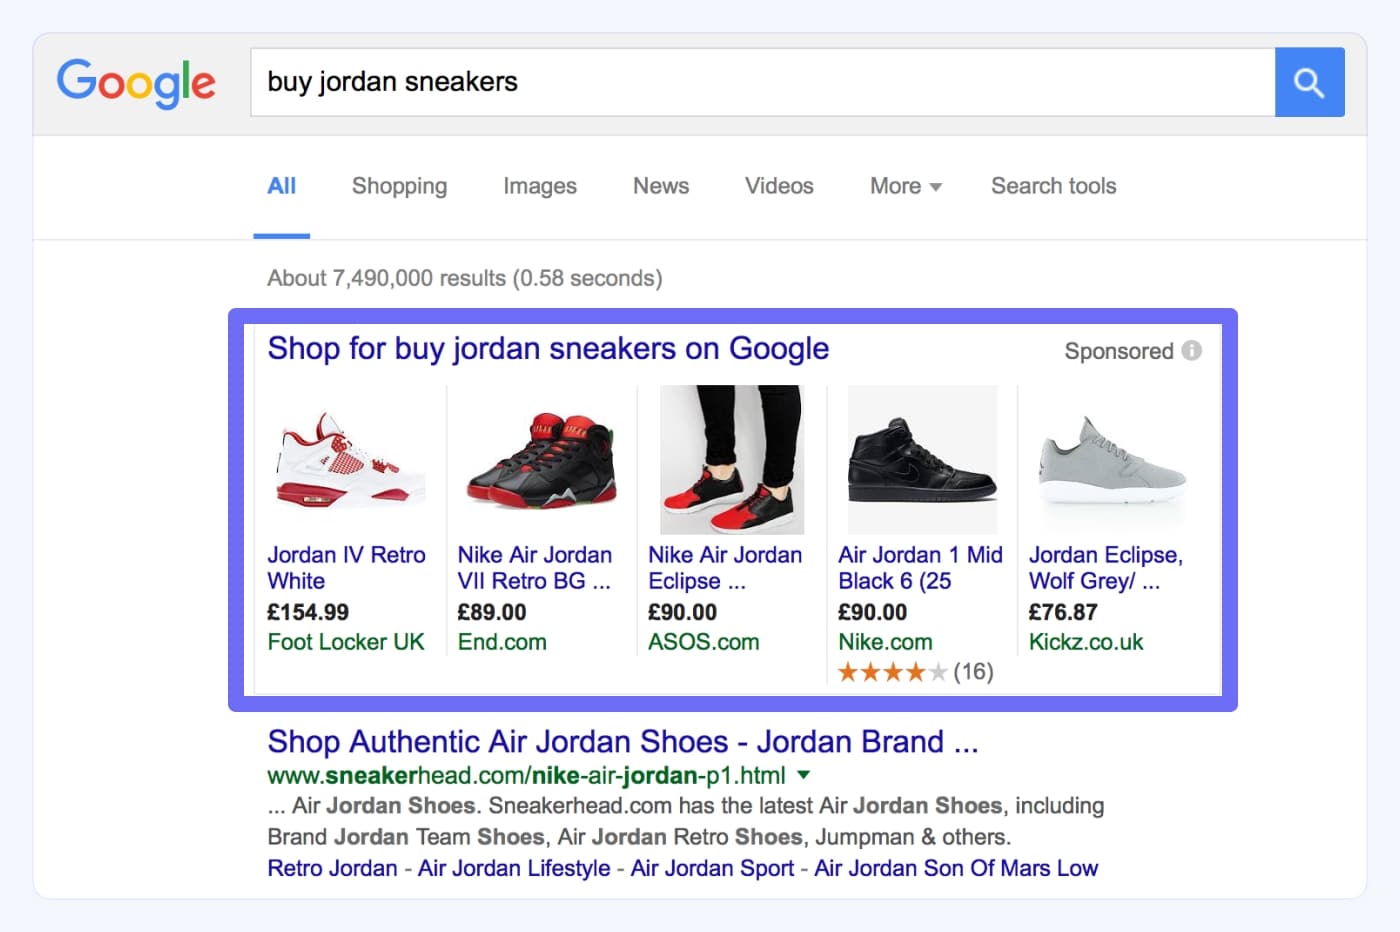 advertise amazon products on google